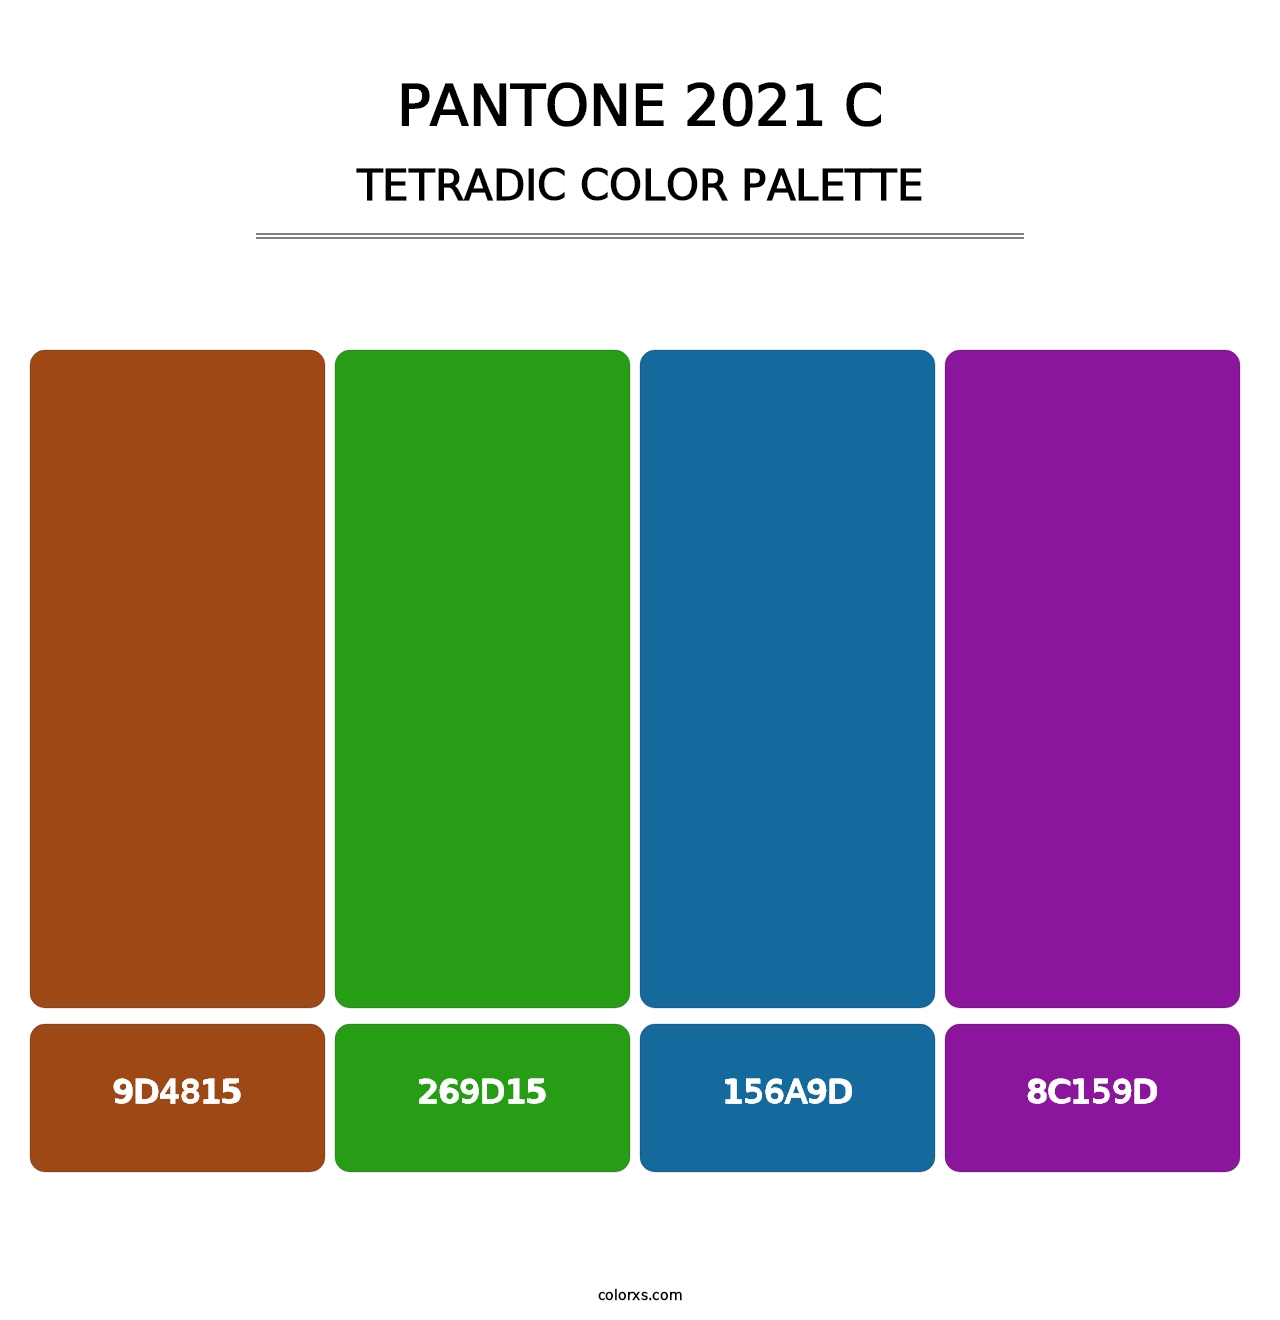 PANTONE 2021 C - Tetradic Color Palette